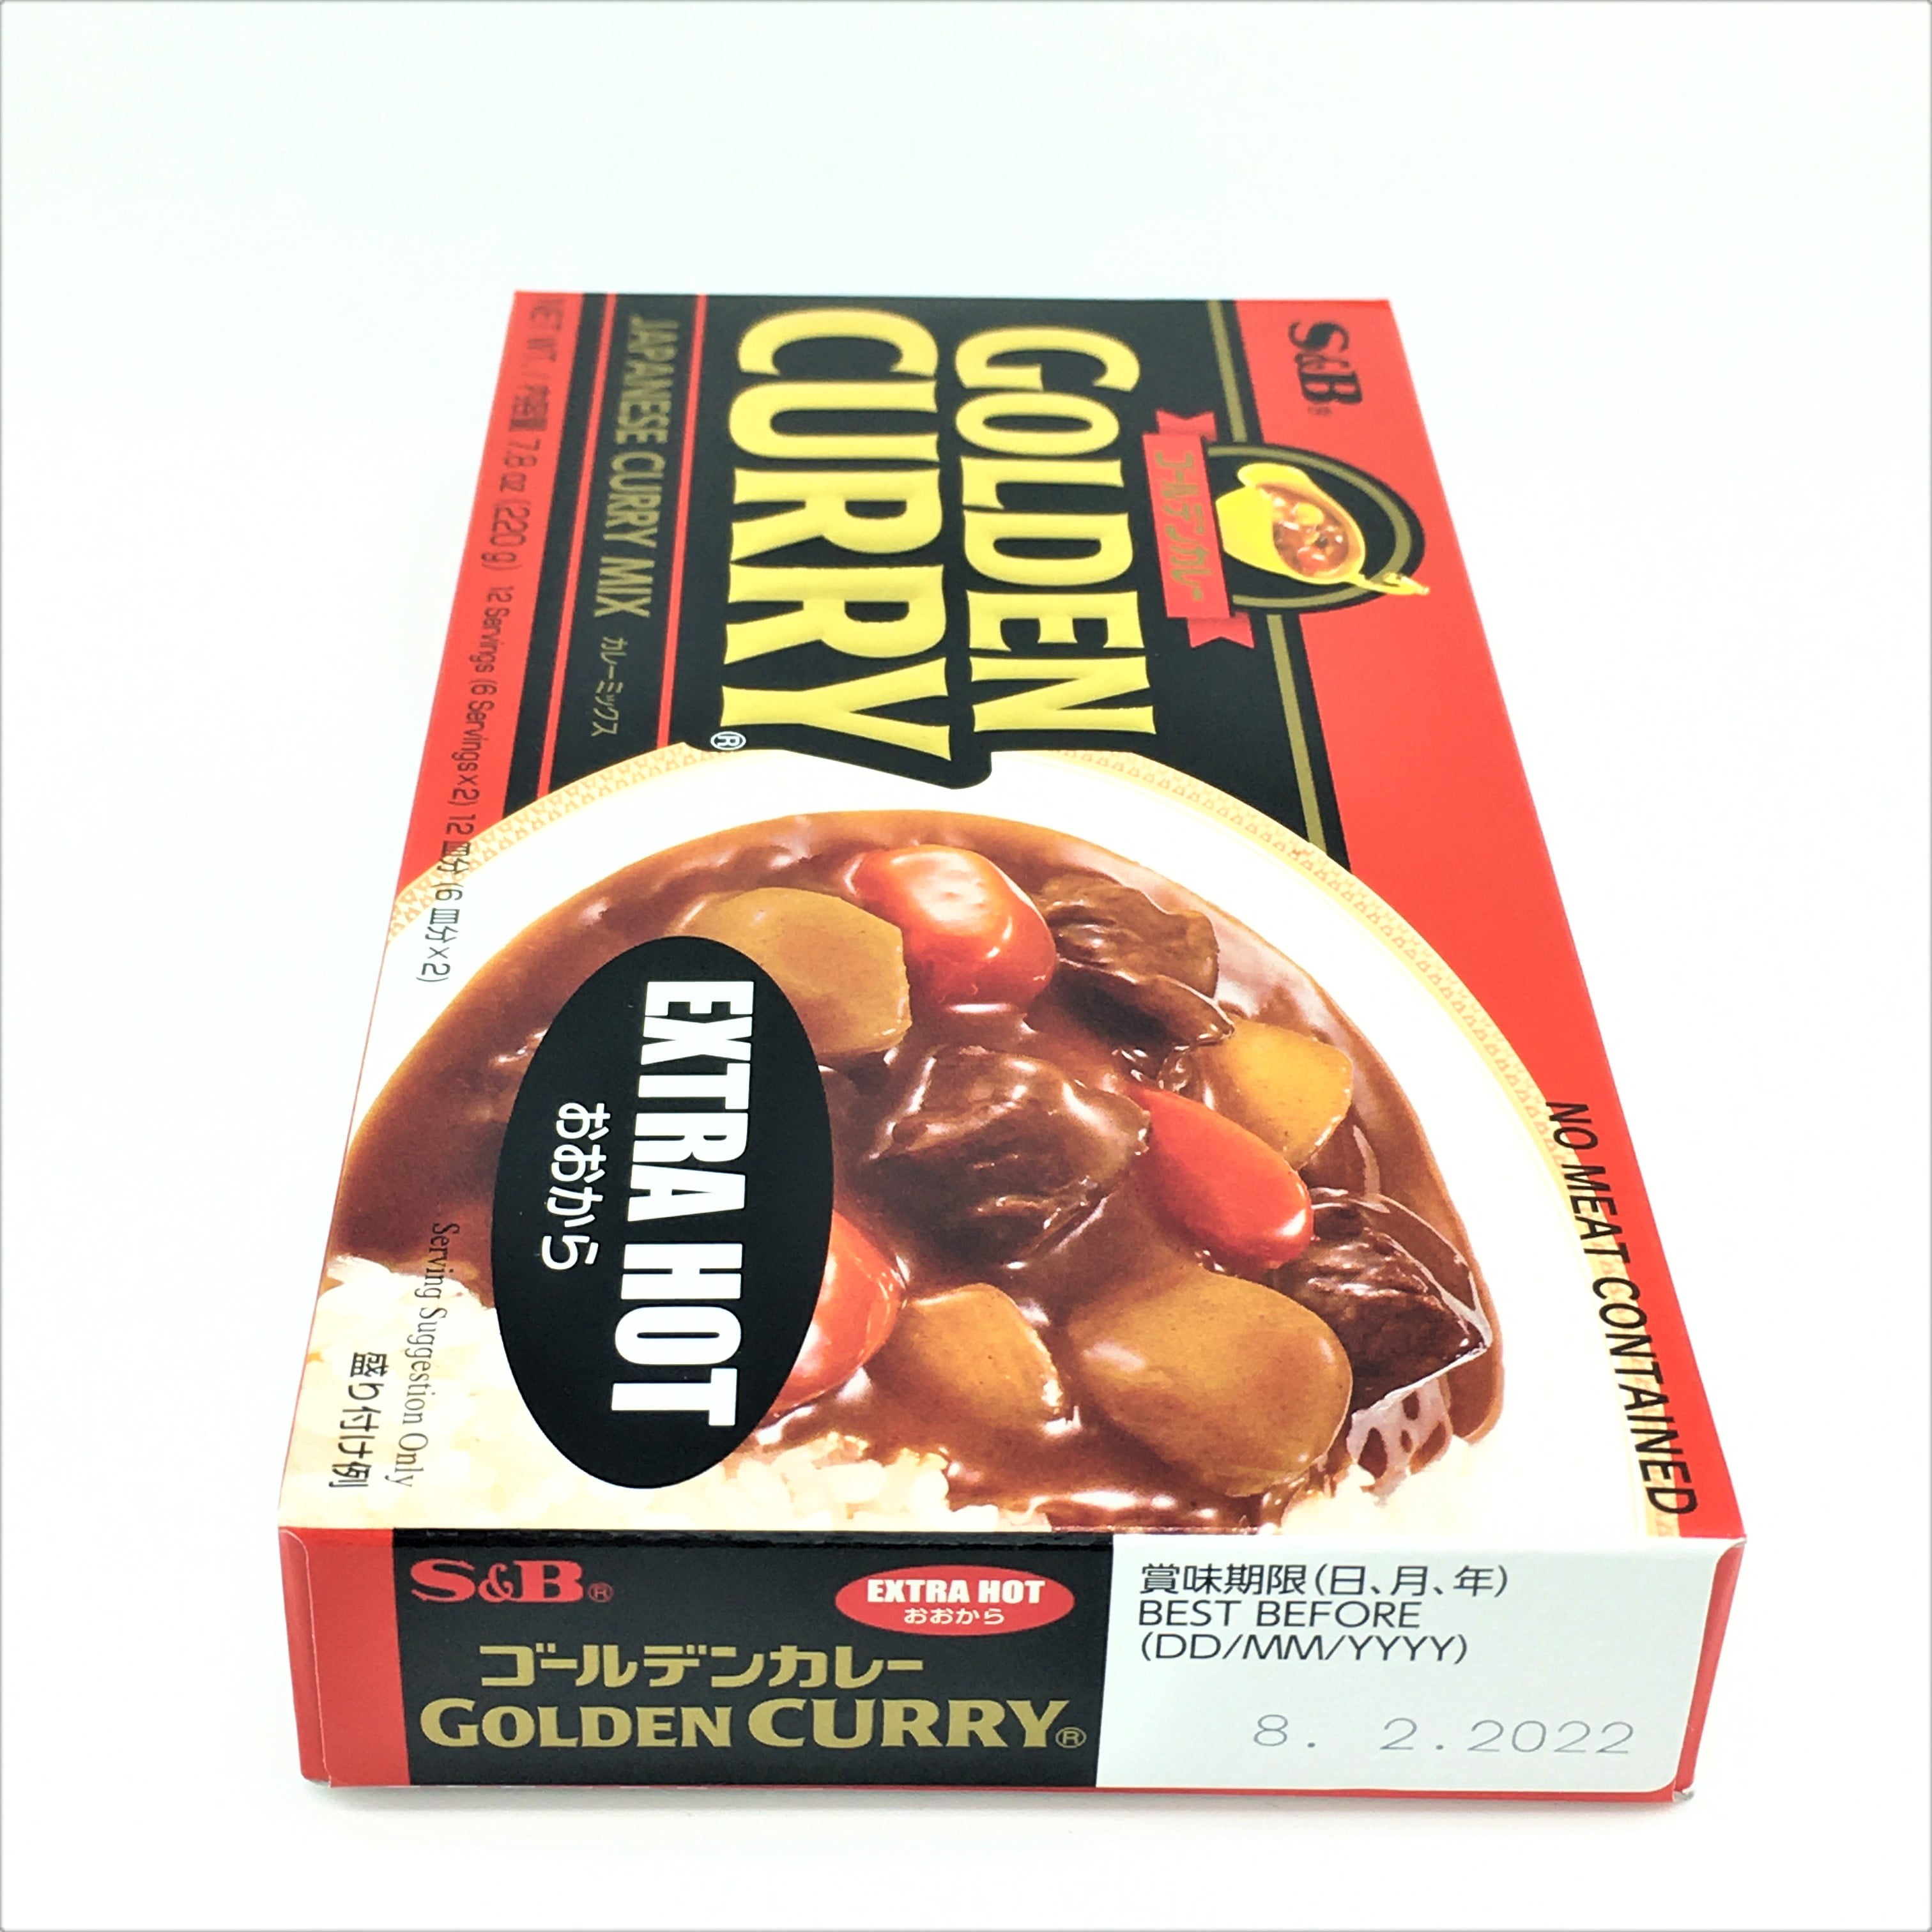 S&B Golden Curry Sauce Mix, Extra Hot, 7.8 Ounce